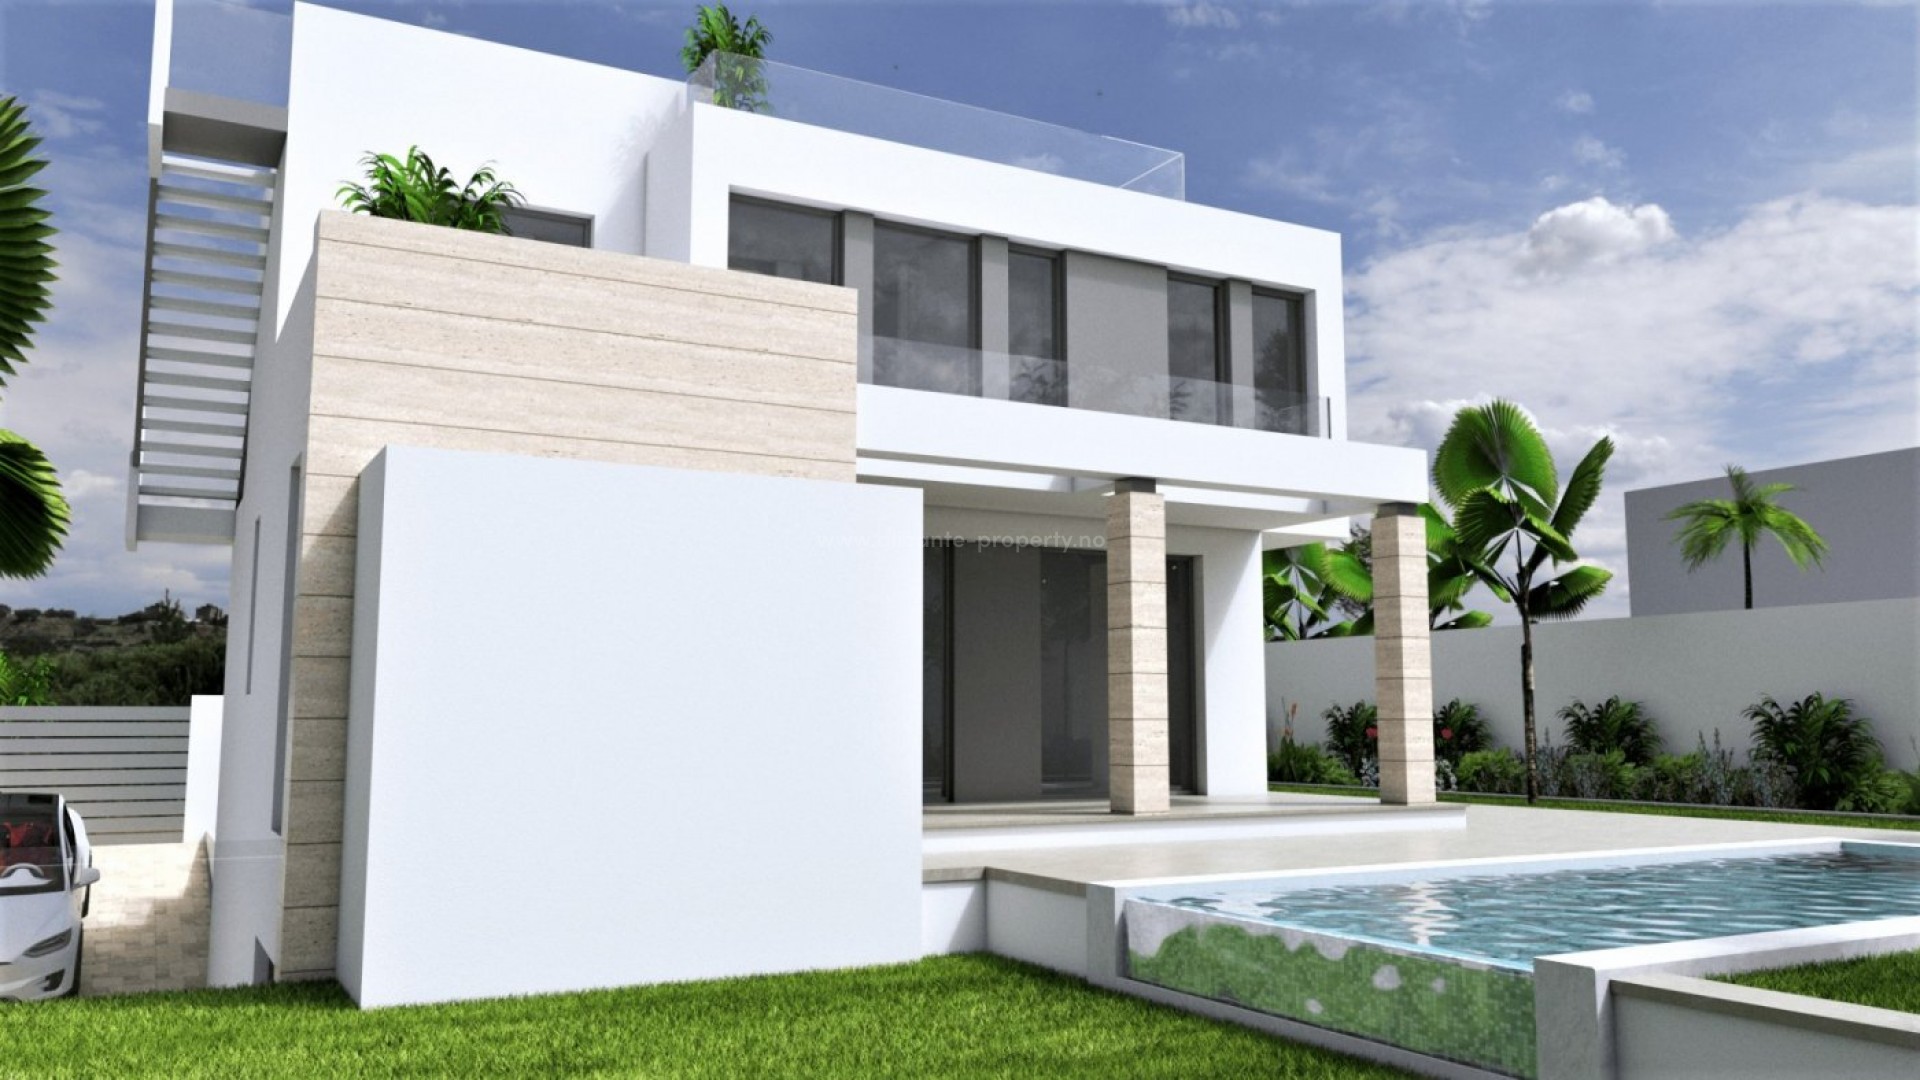 Villas/houses in Aguas Nuevas, Torrevieja, 3 bedrooms, 3 bathrooms, pool, 2 terraces, balcony, solarium, basement/garage,